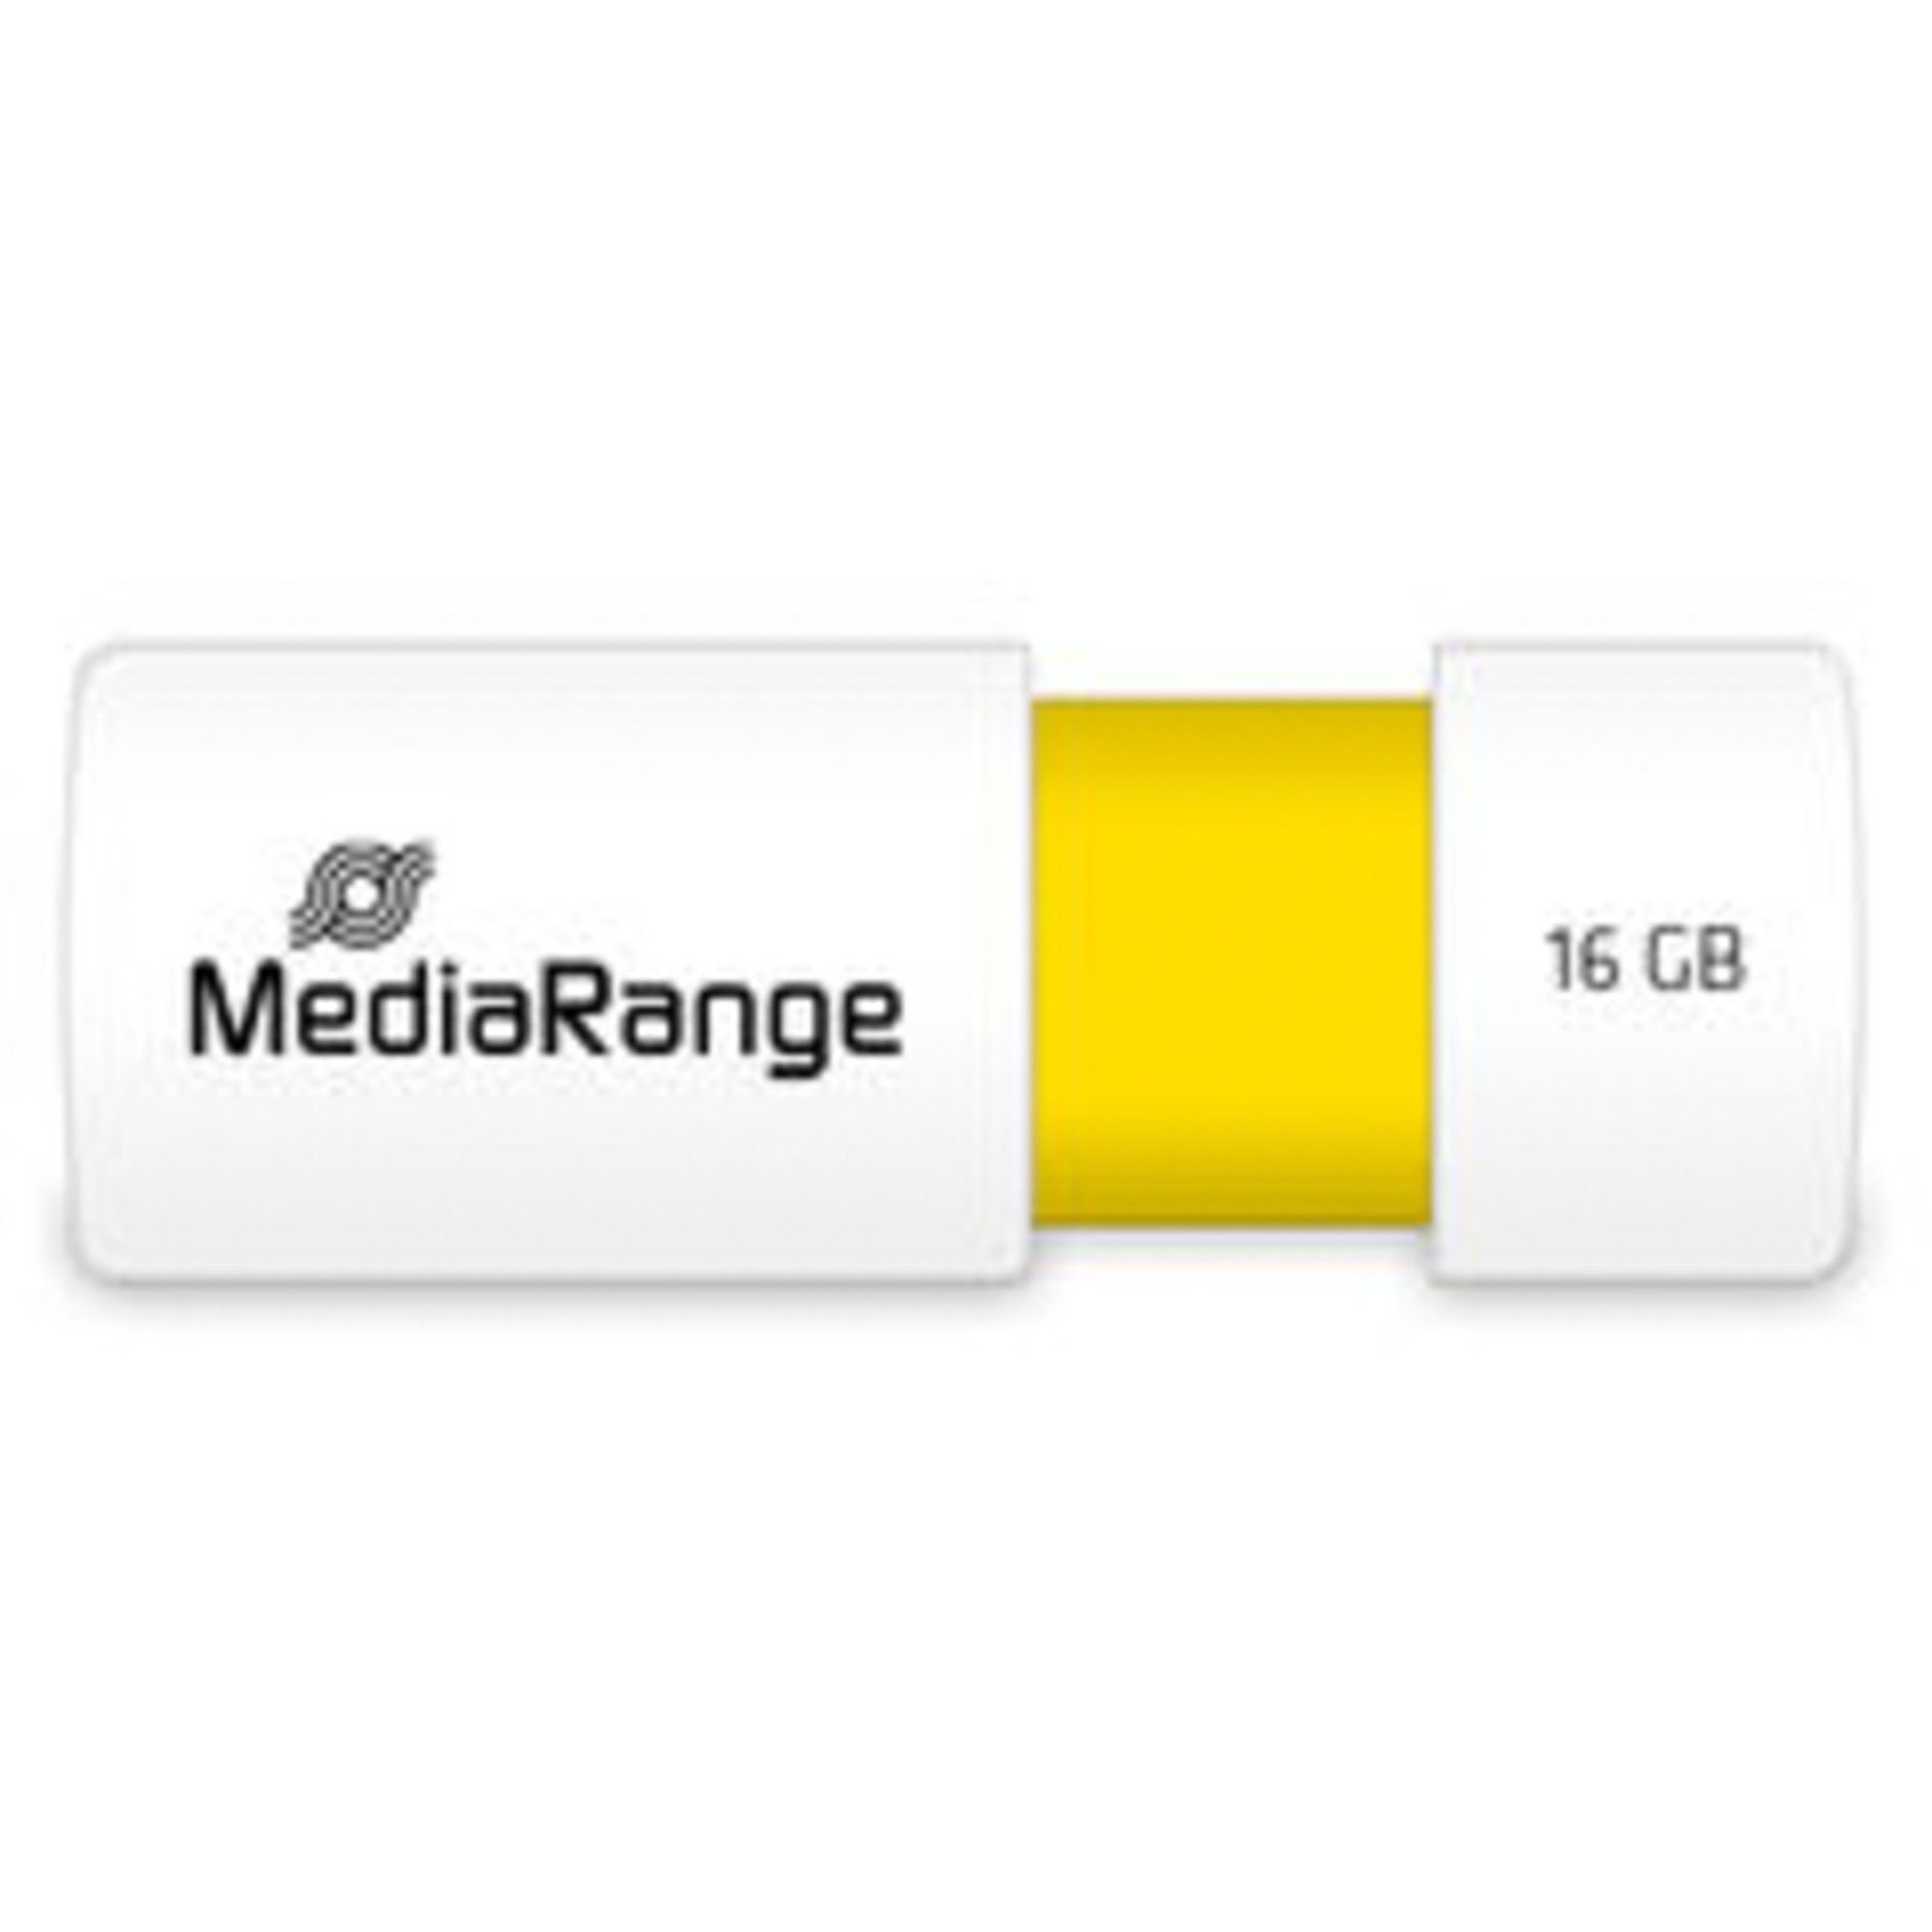 Mediarange Color Edition 16 GB USB-Stick